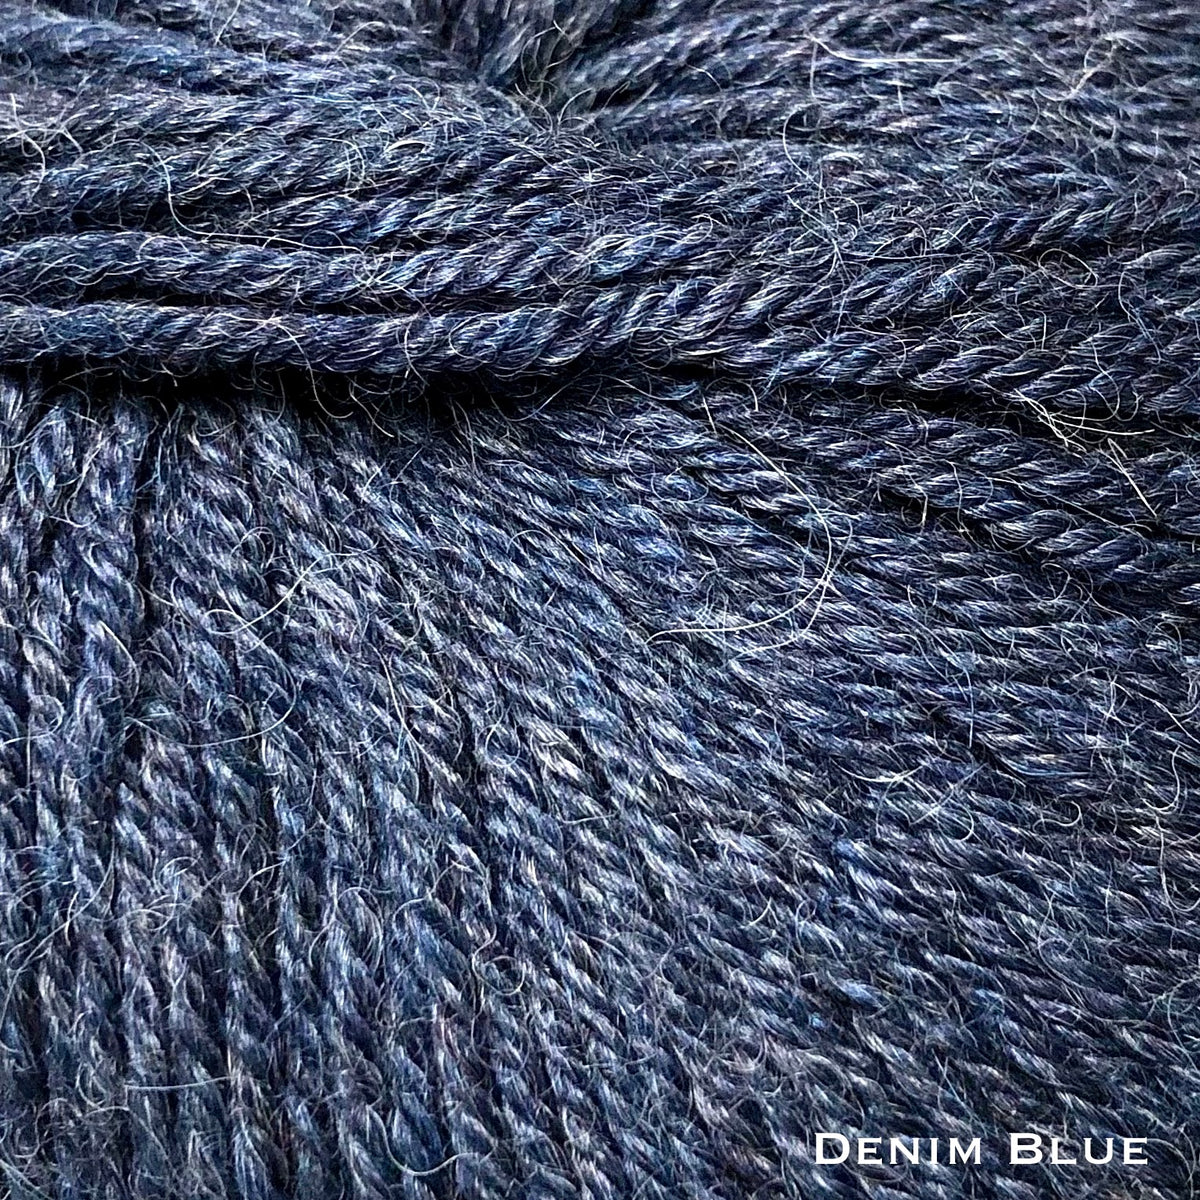 denim blue sport weight yarn for knitting and crochet